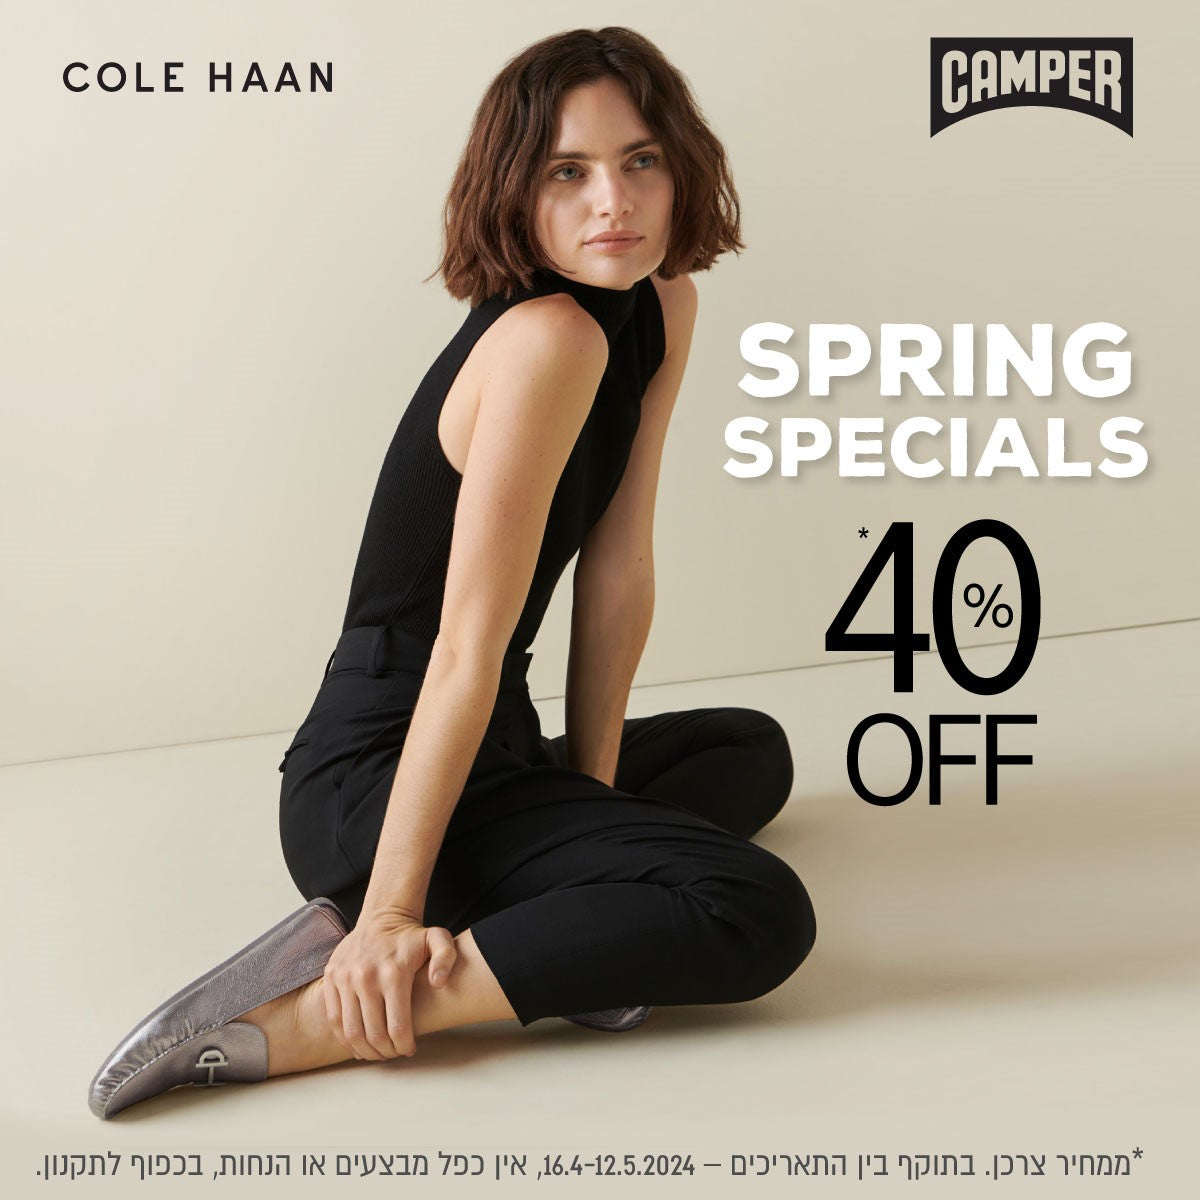 spring specials 40% off cole haan & camper  בתוקף מ 16.4.24 עד 12.5.24